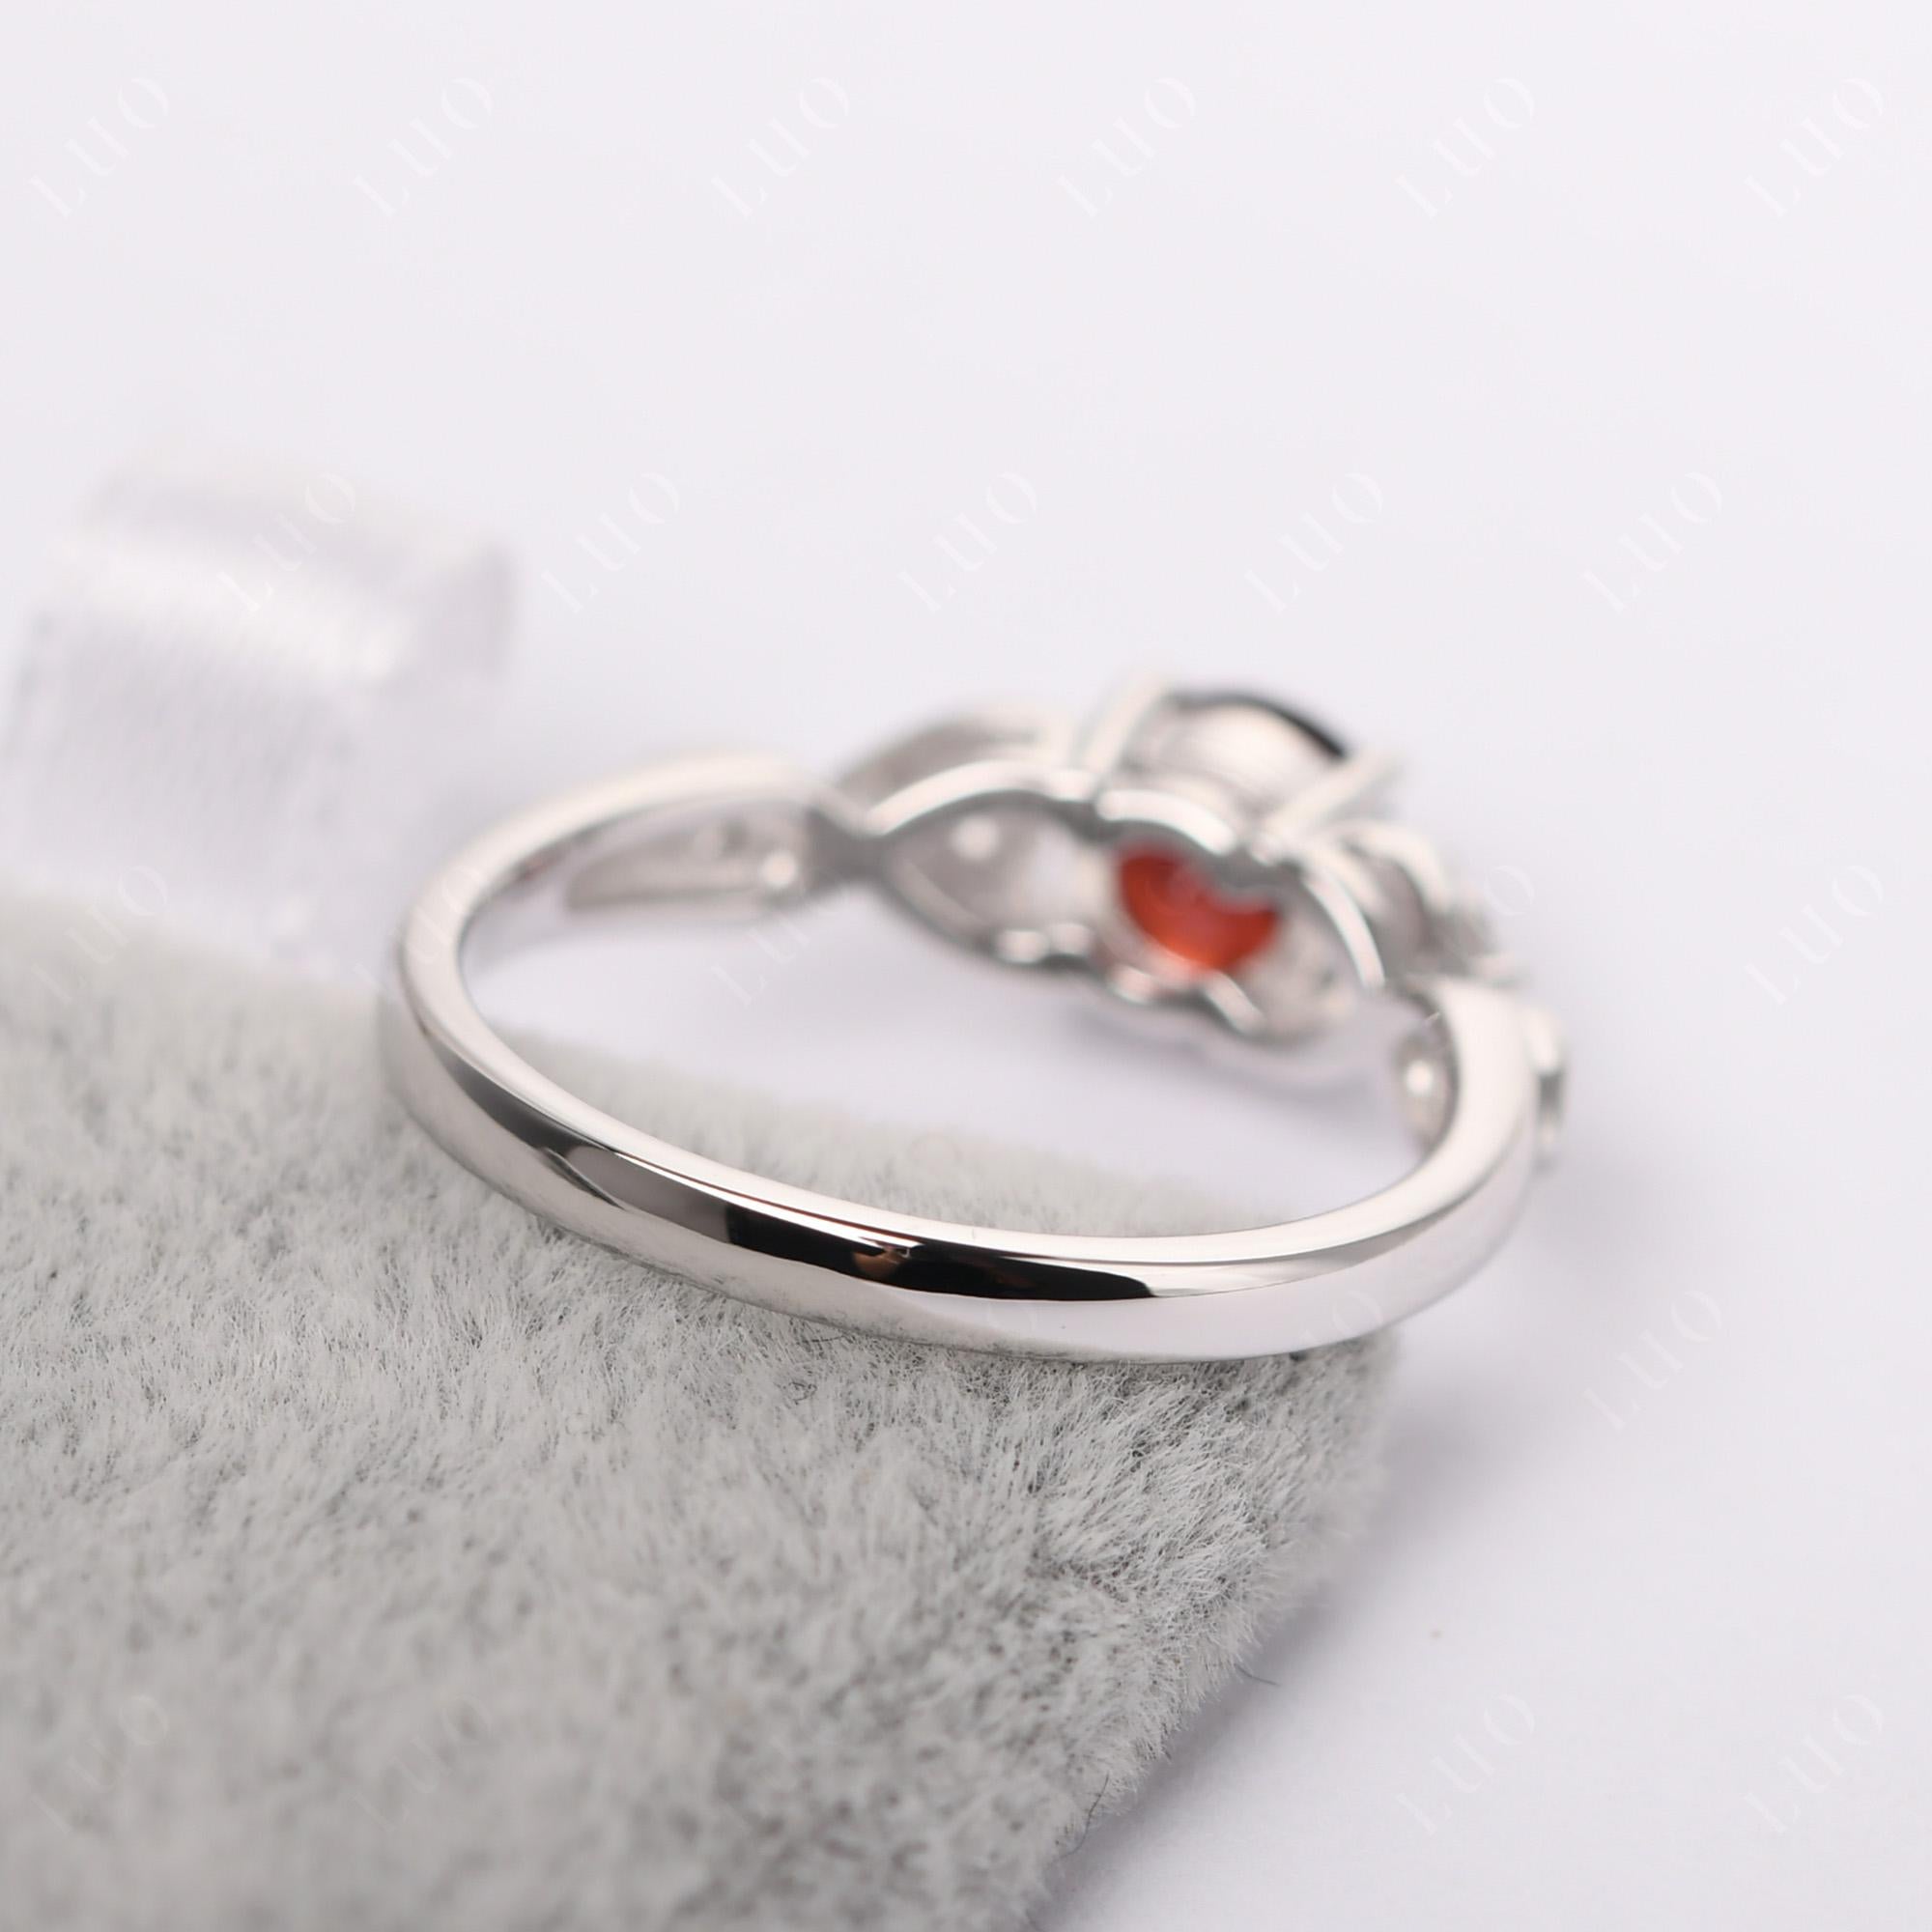 Round Garnet Ring Wedding Ring - LUO Jewelry